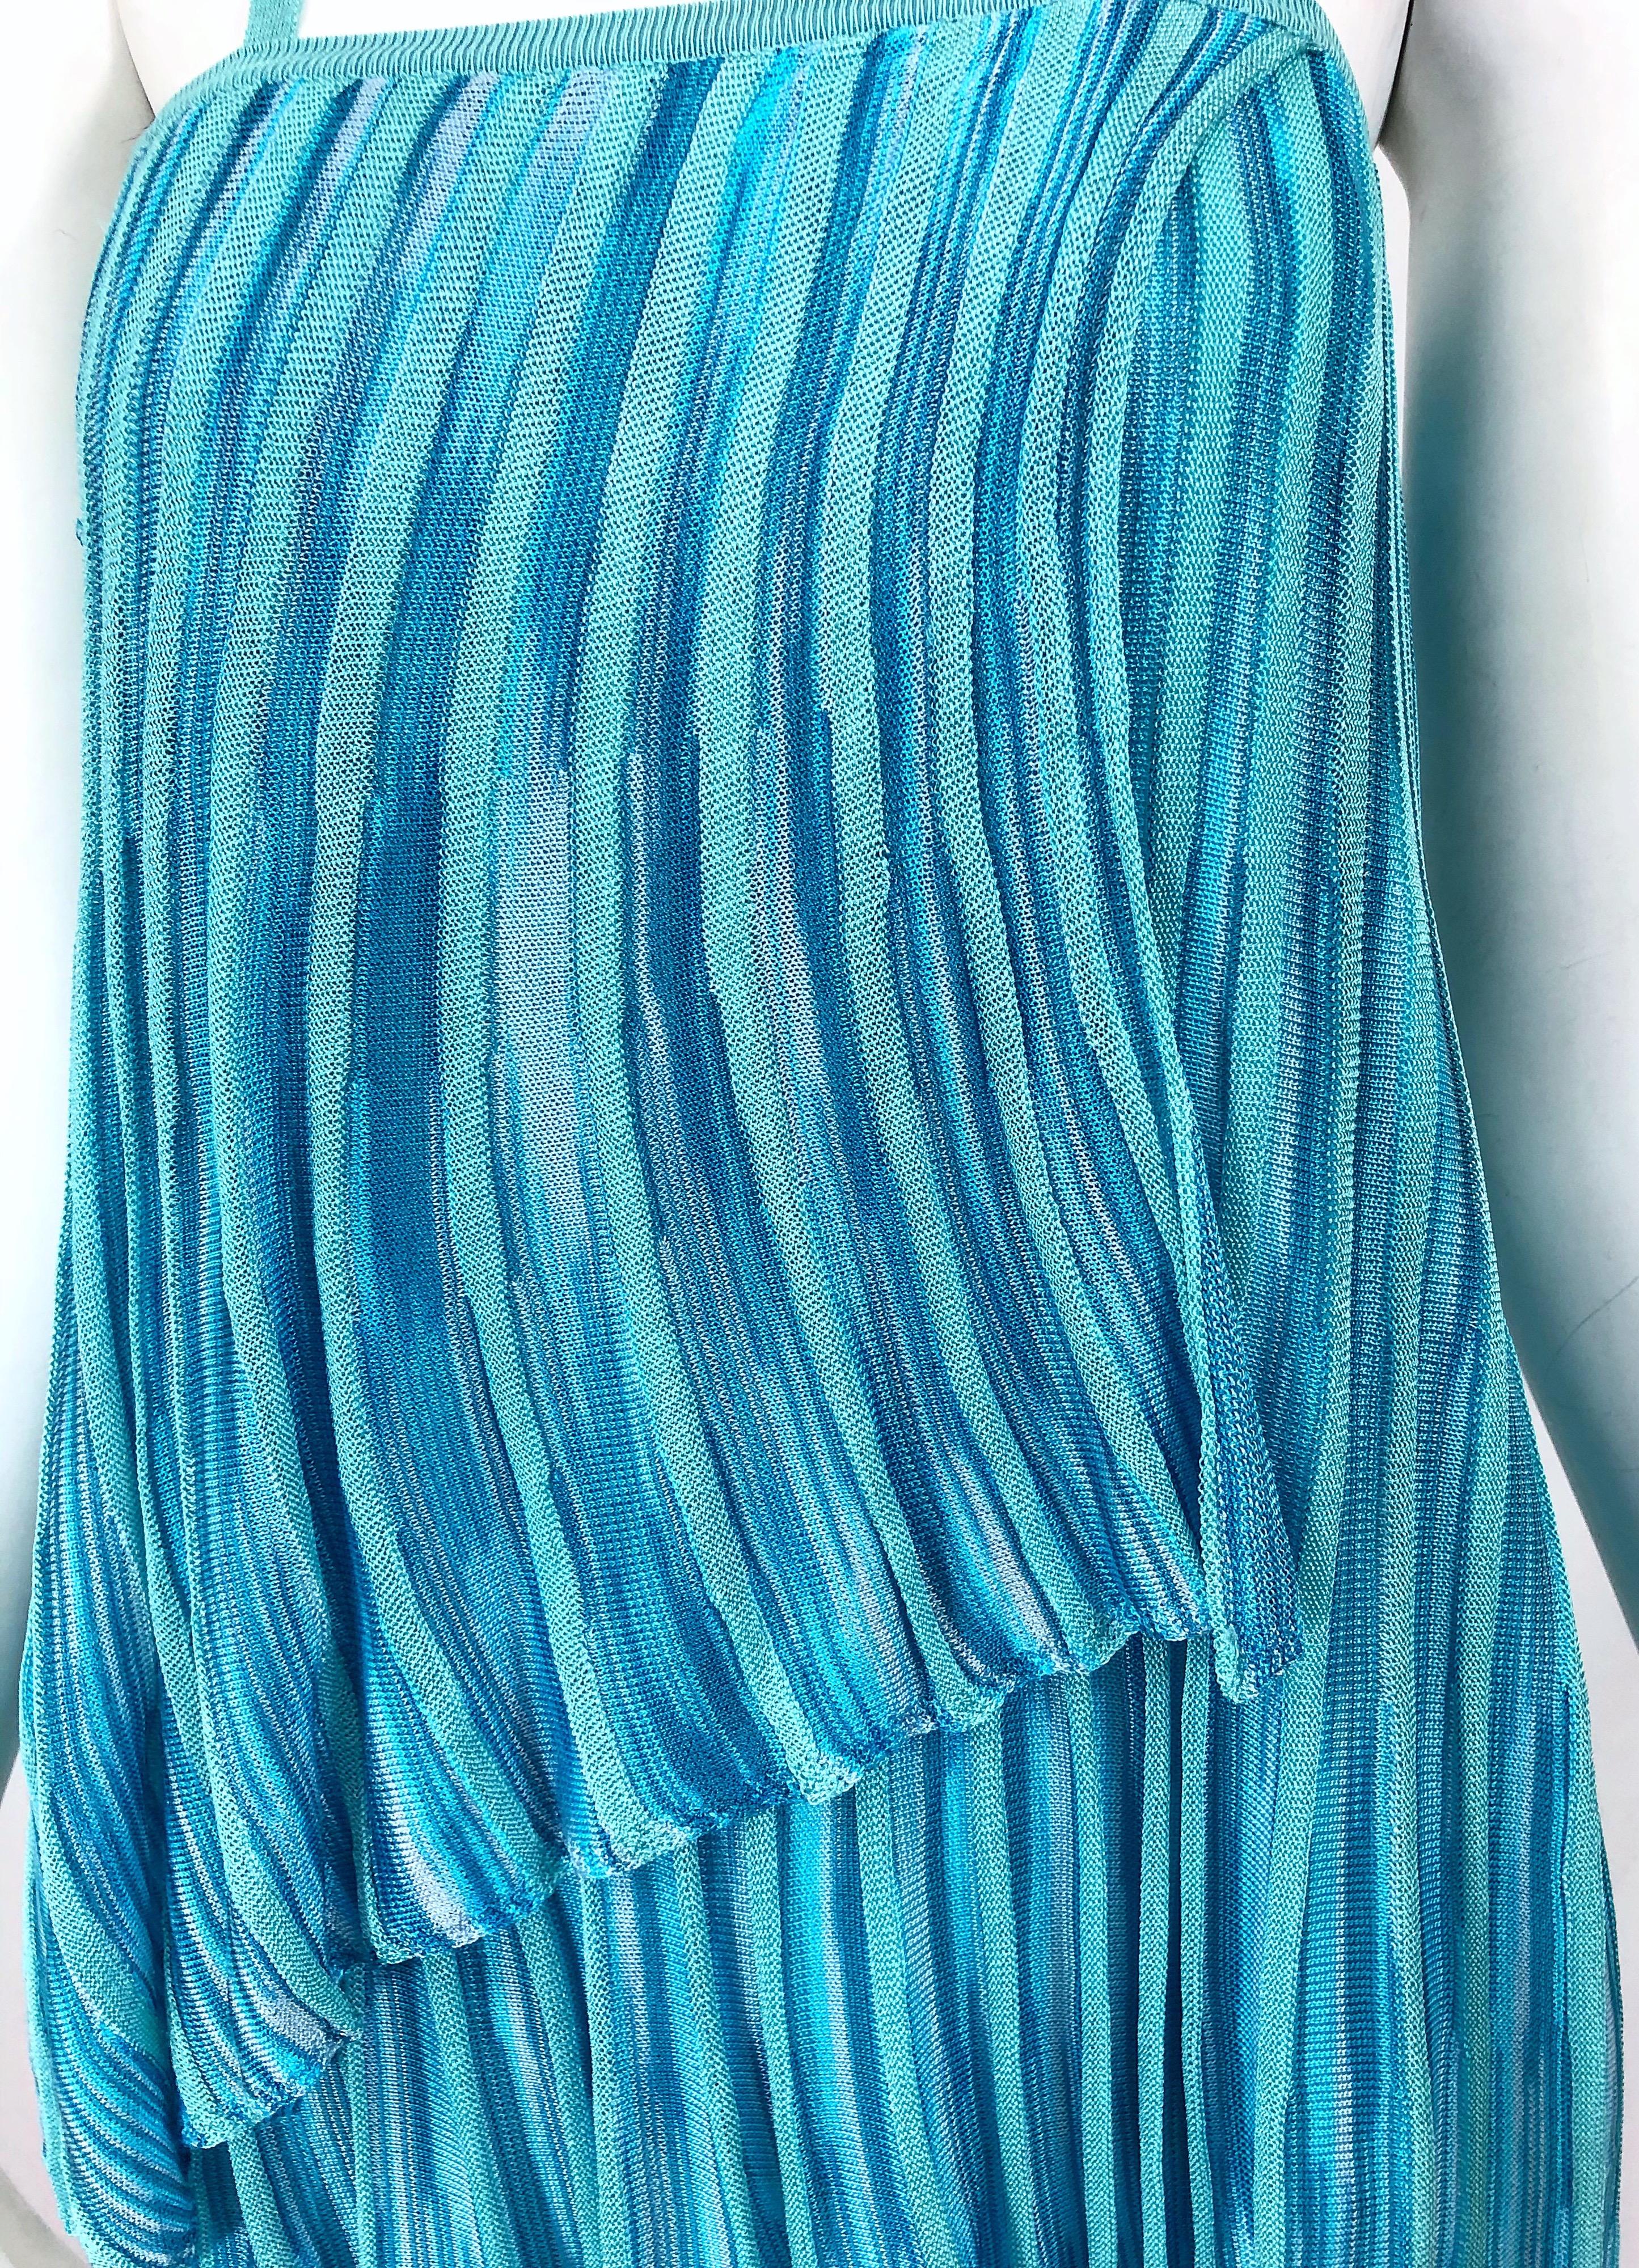 Women's Vintage Missoni 1990s Turquoise Teal Blue Knit Vintage 90s Halter Top OR Skirt For Sale